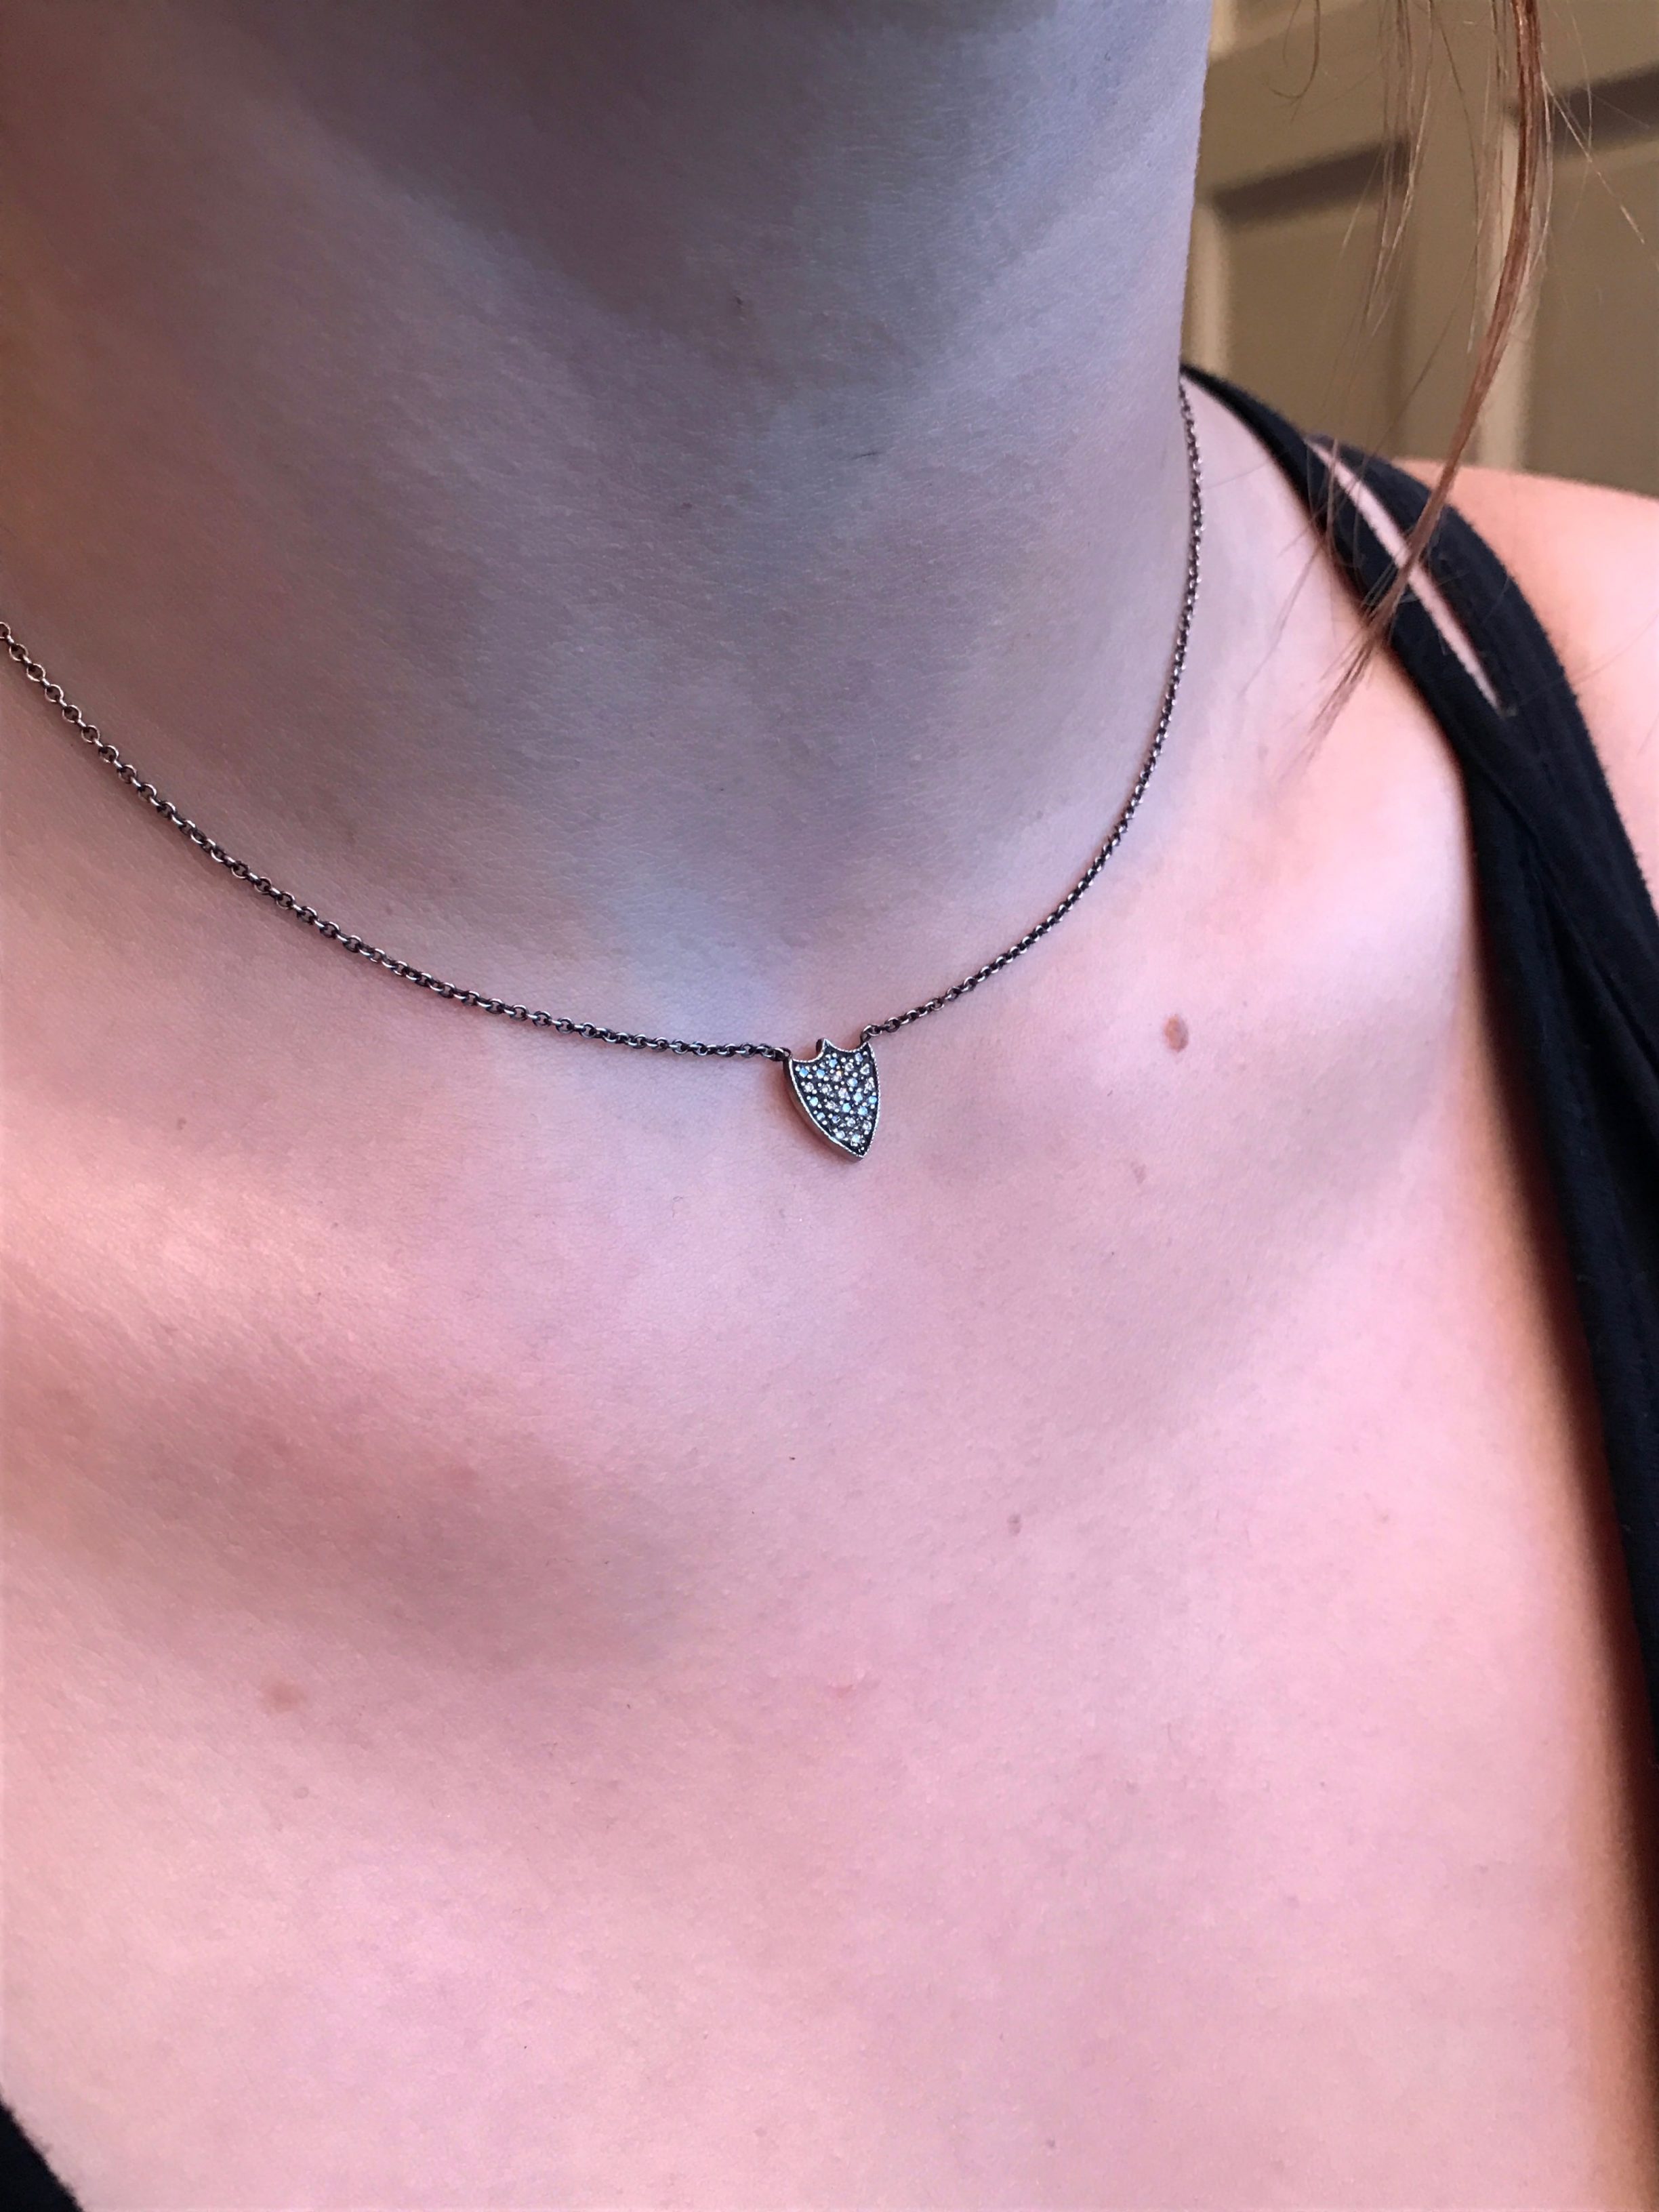 erlina necklace